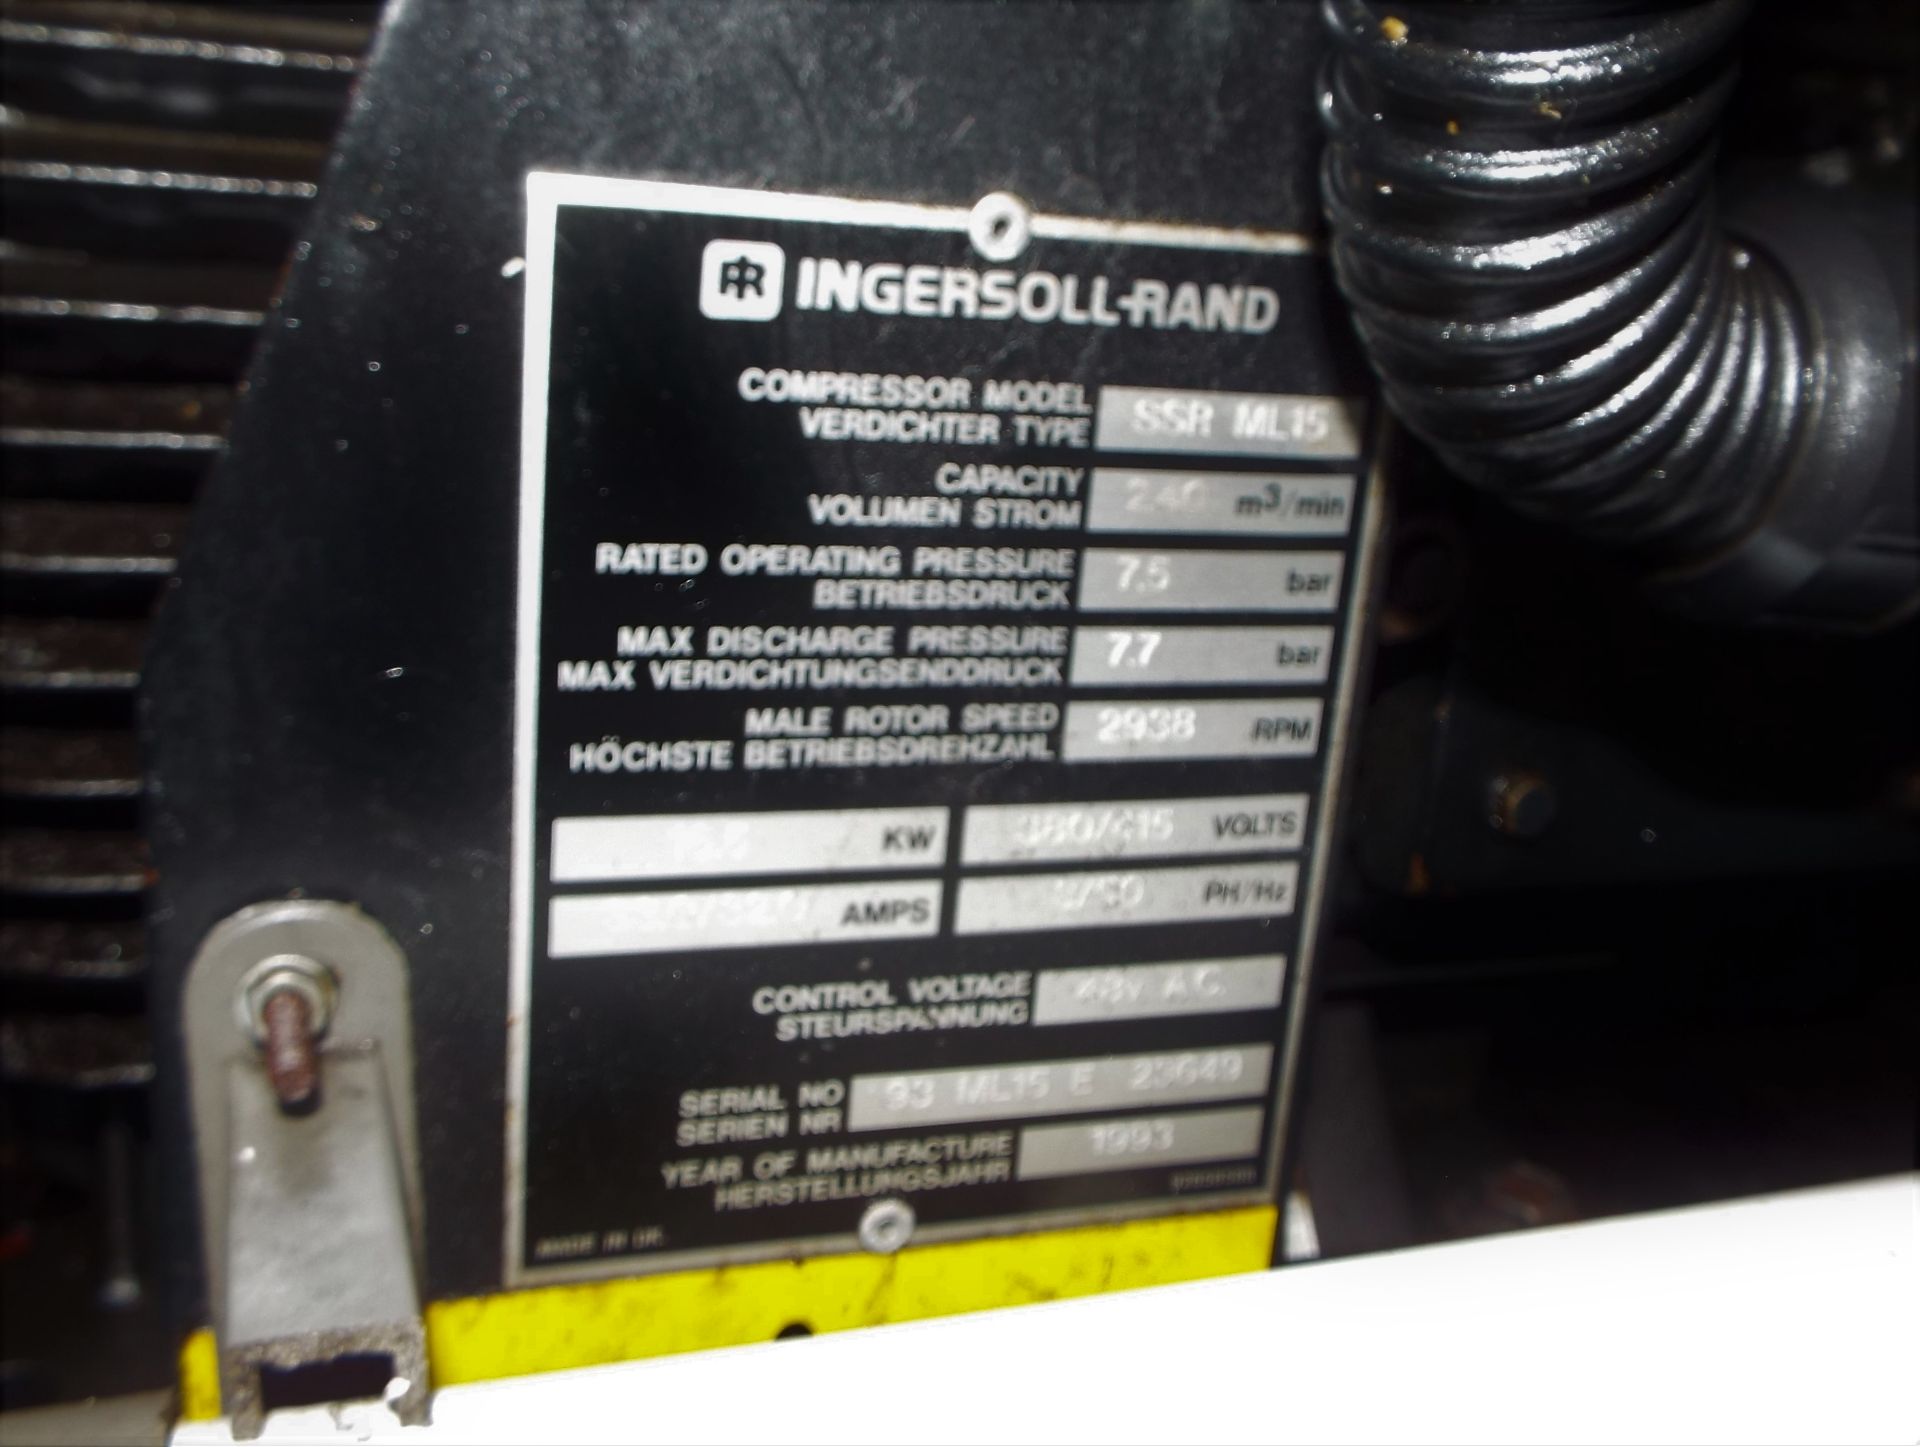 Ingersoll Rand SSR ML15 Compressor. - Image 5 of 5